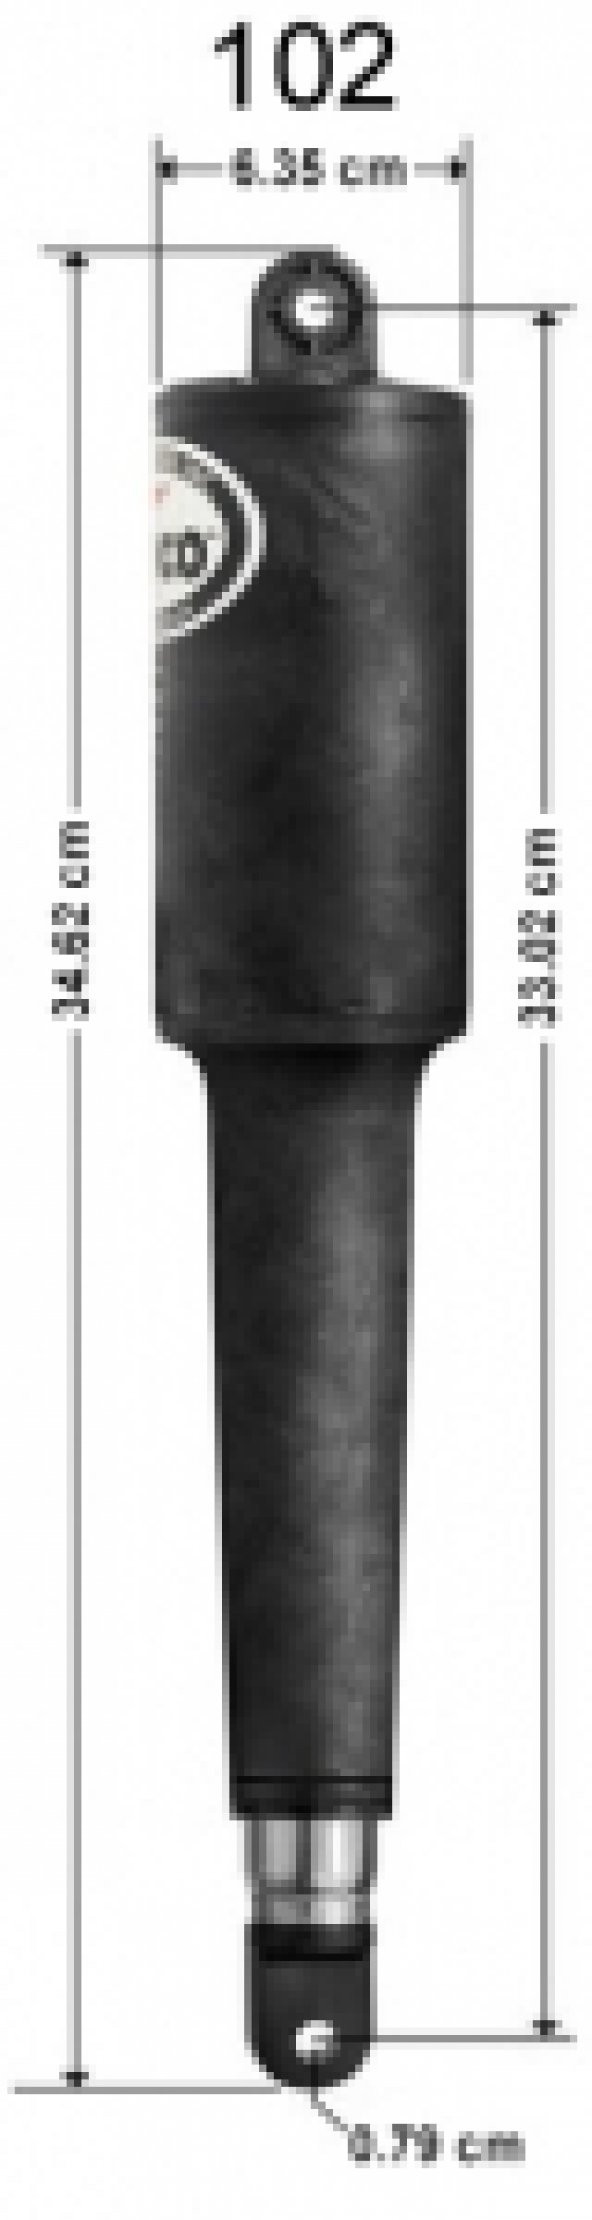 Lenco silindir 180 cm kablolu 24V Strok 108 mm